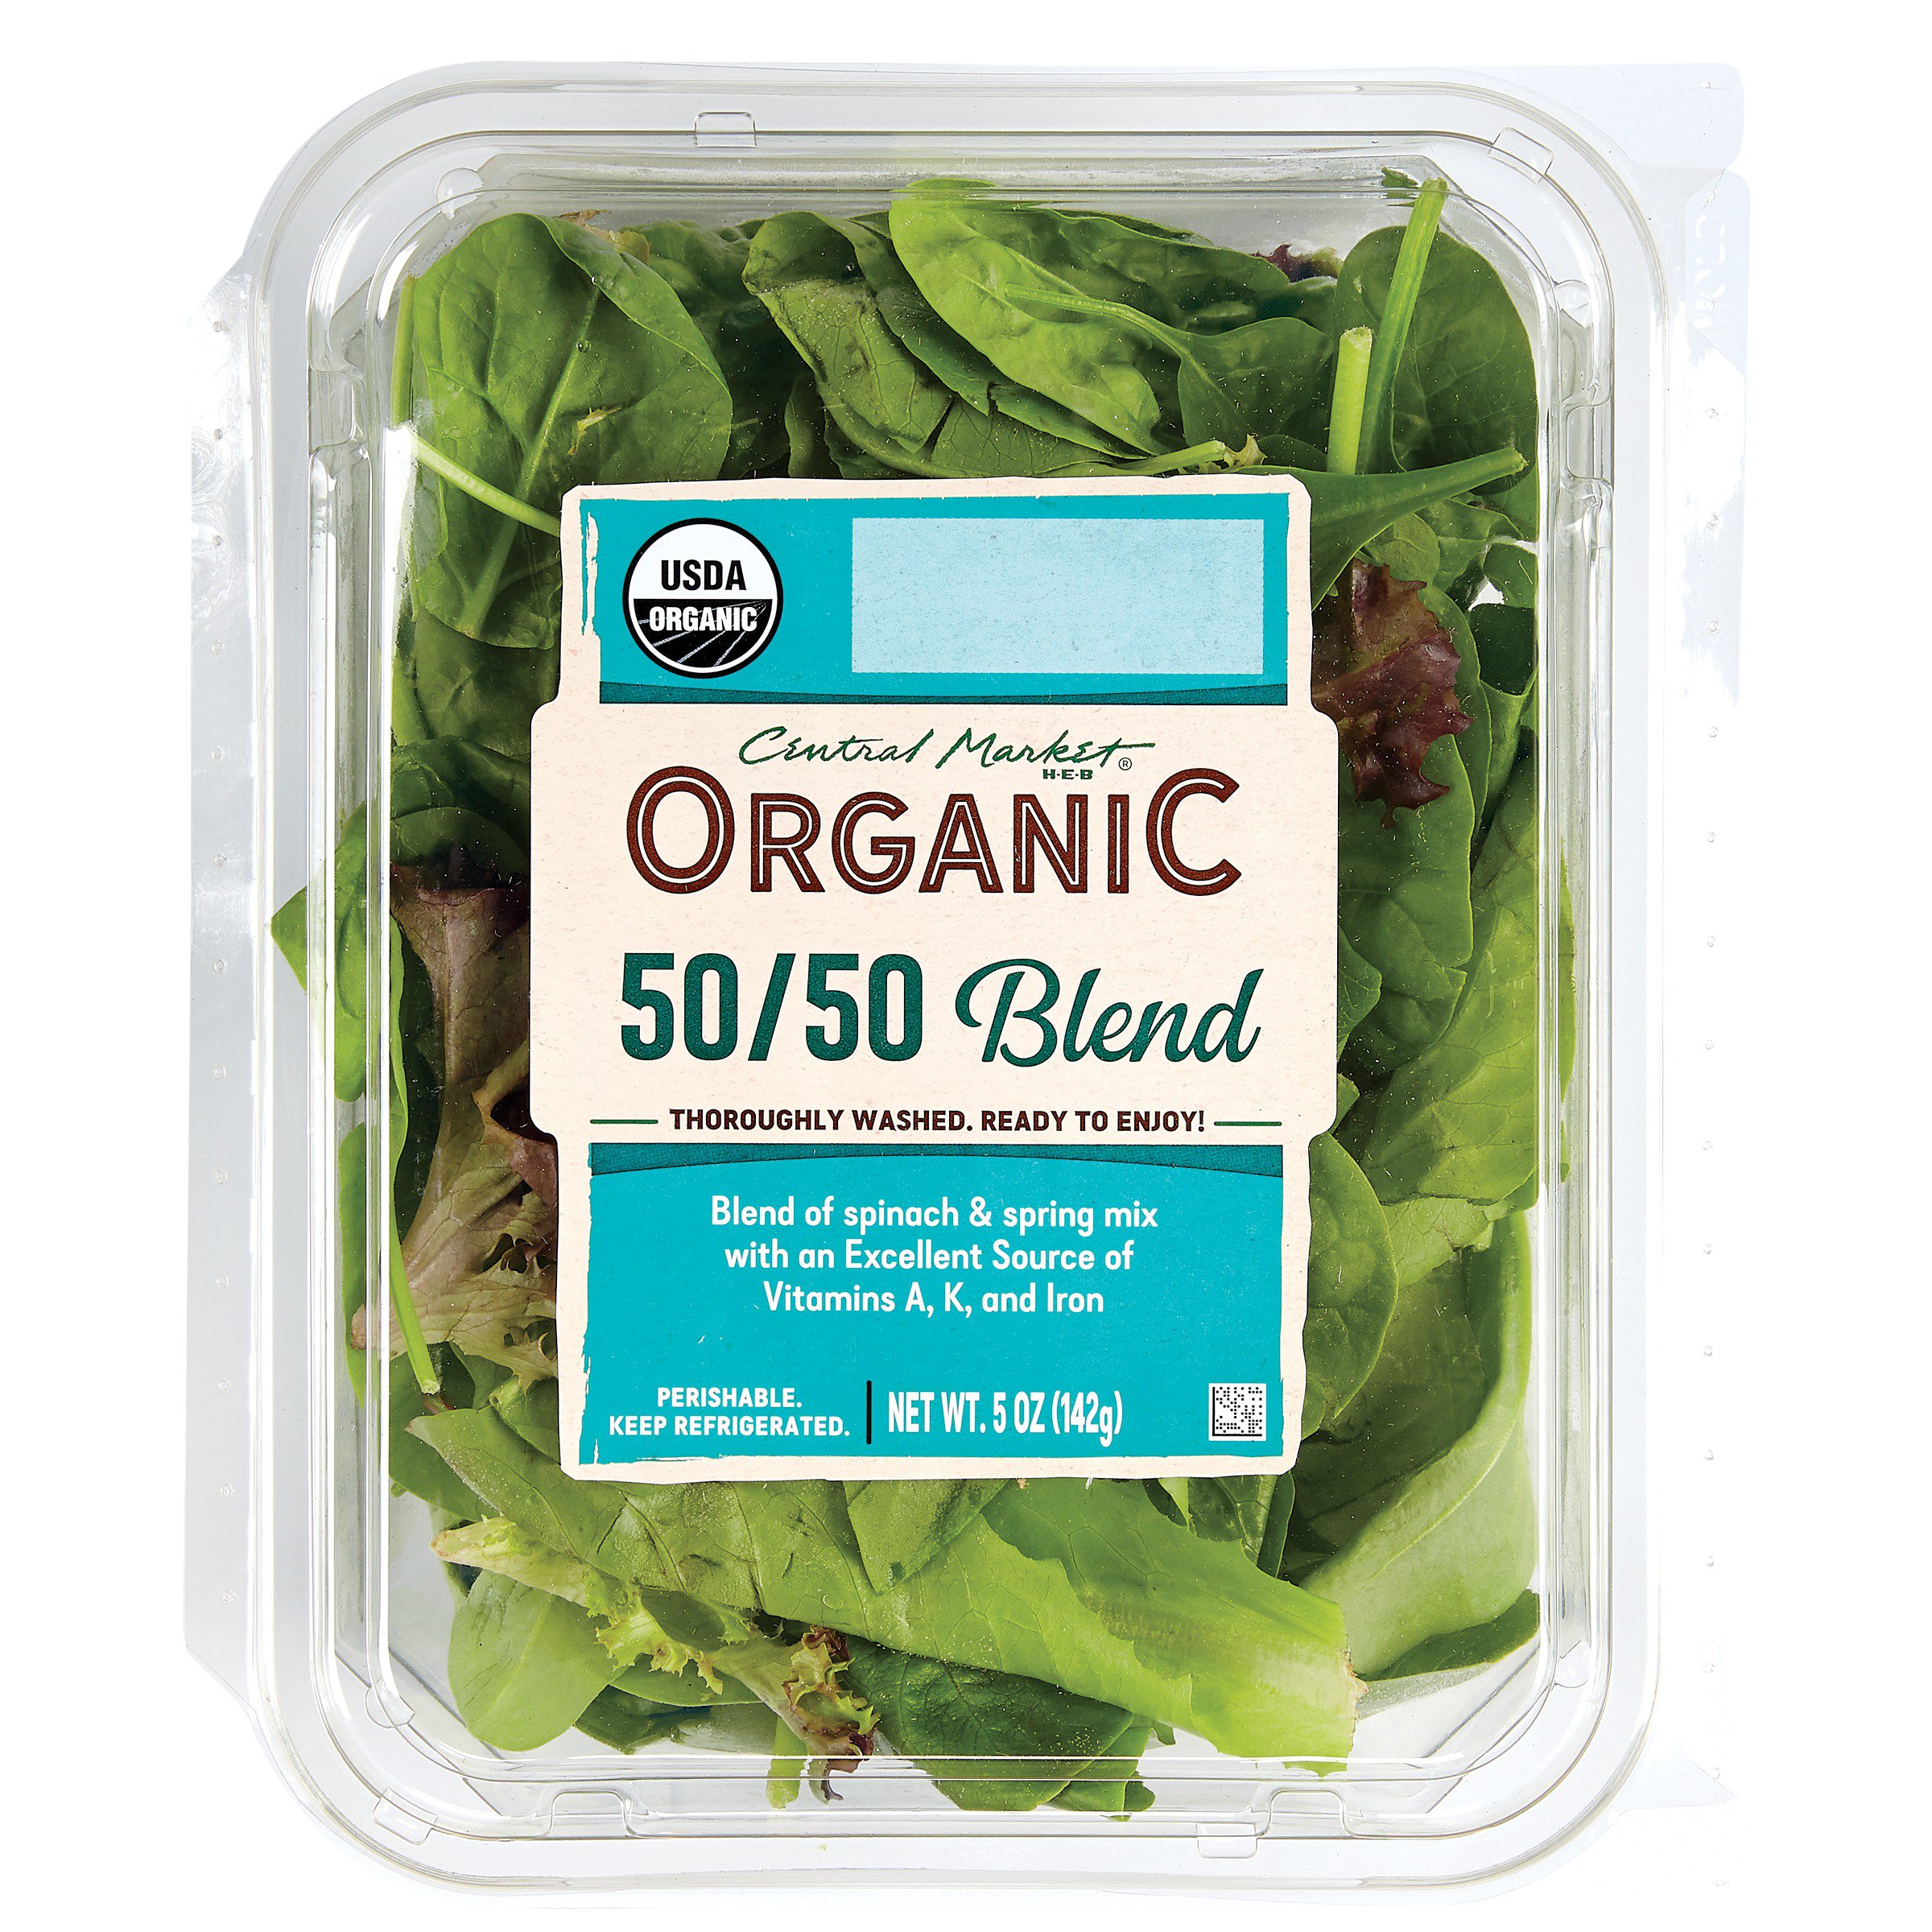 Central Market Organic 50/50 Blend - Shop Lettuce & Leafy Greens at H-E-B